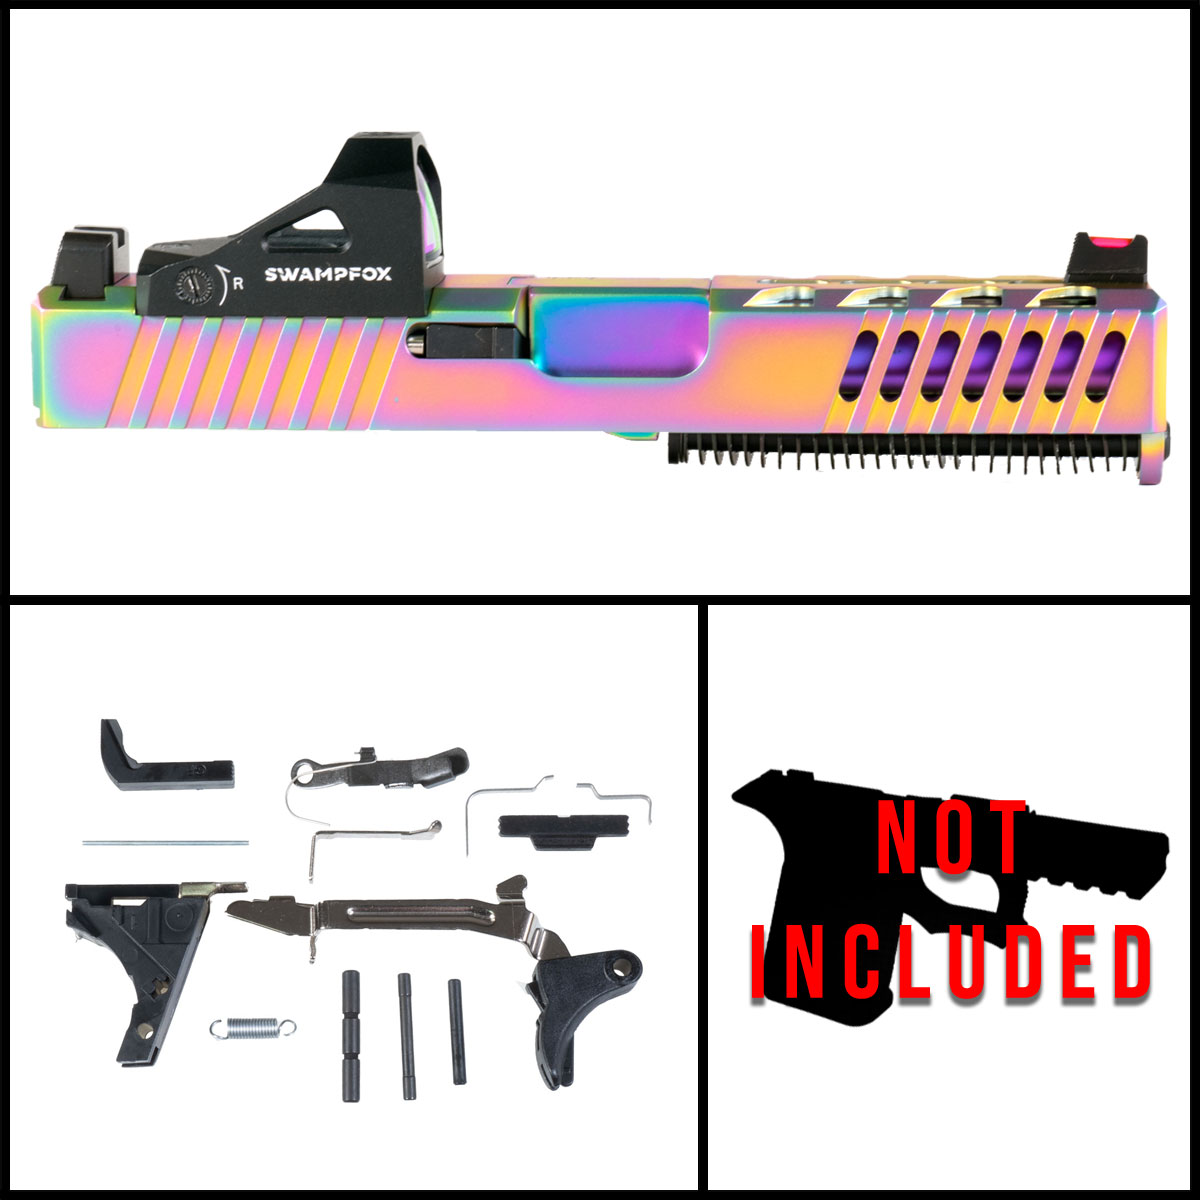 OTD 'SkyShade w/ Swampfox Justice RMR' 9mm Full Pistol Build Kits (Everything Minus Frame) - Glock 19 Gen 1-2 Compatible